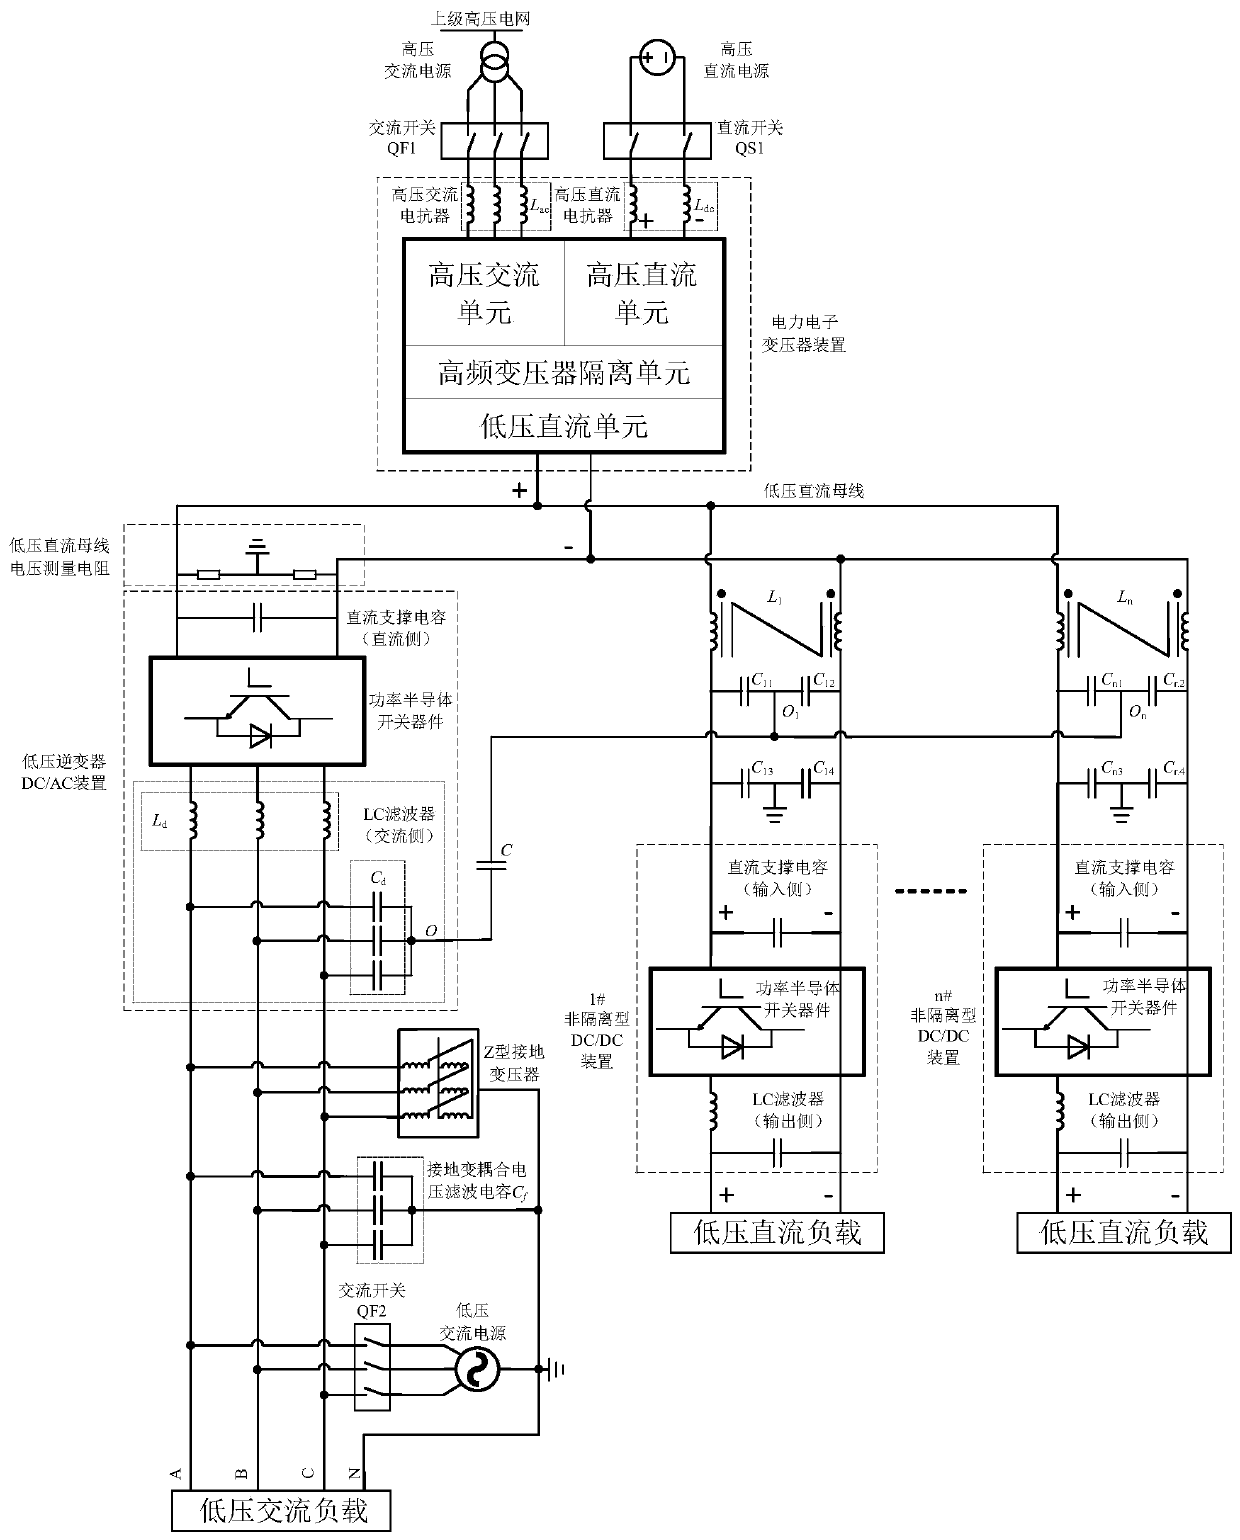 Common-mode voltage suppression system